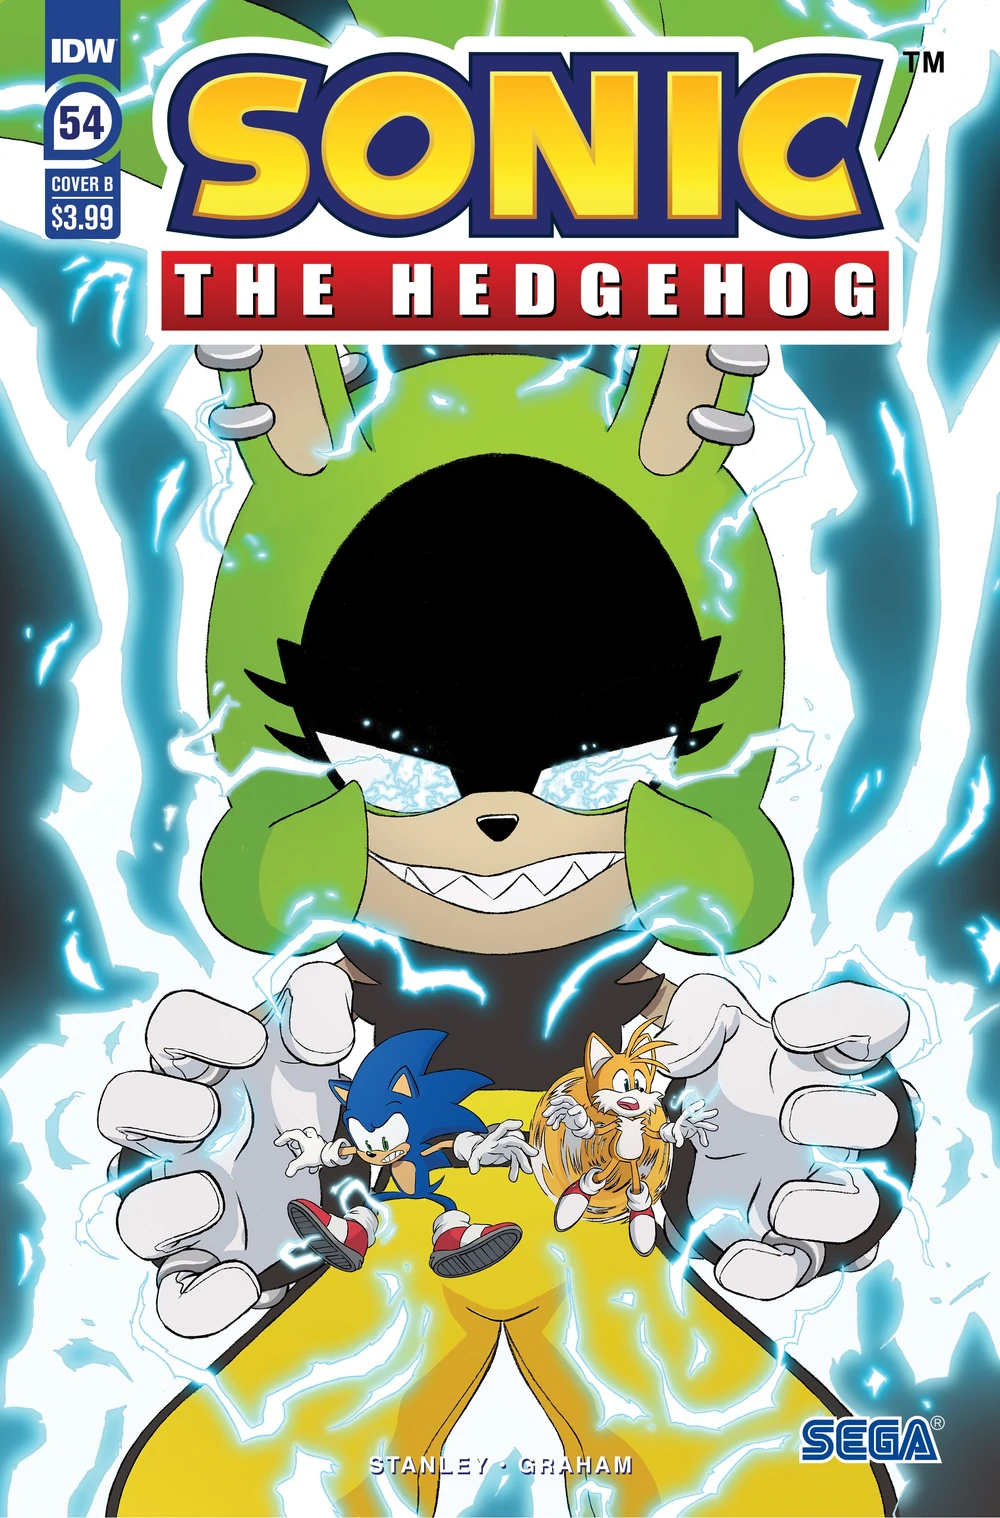 Sonic The Hedgehog #54 Cover B